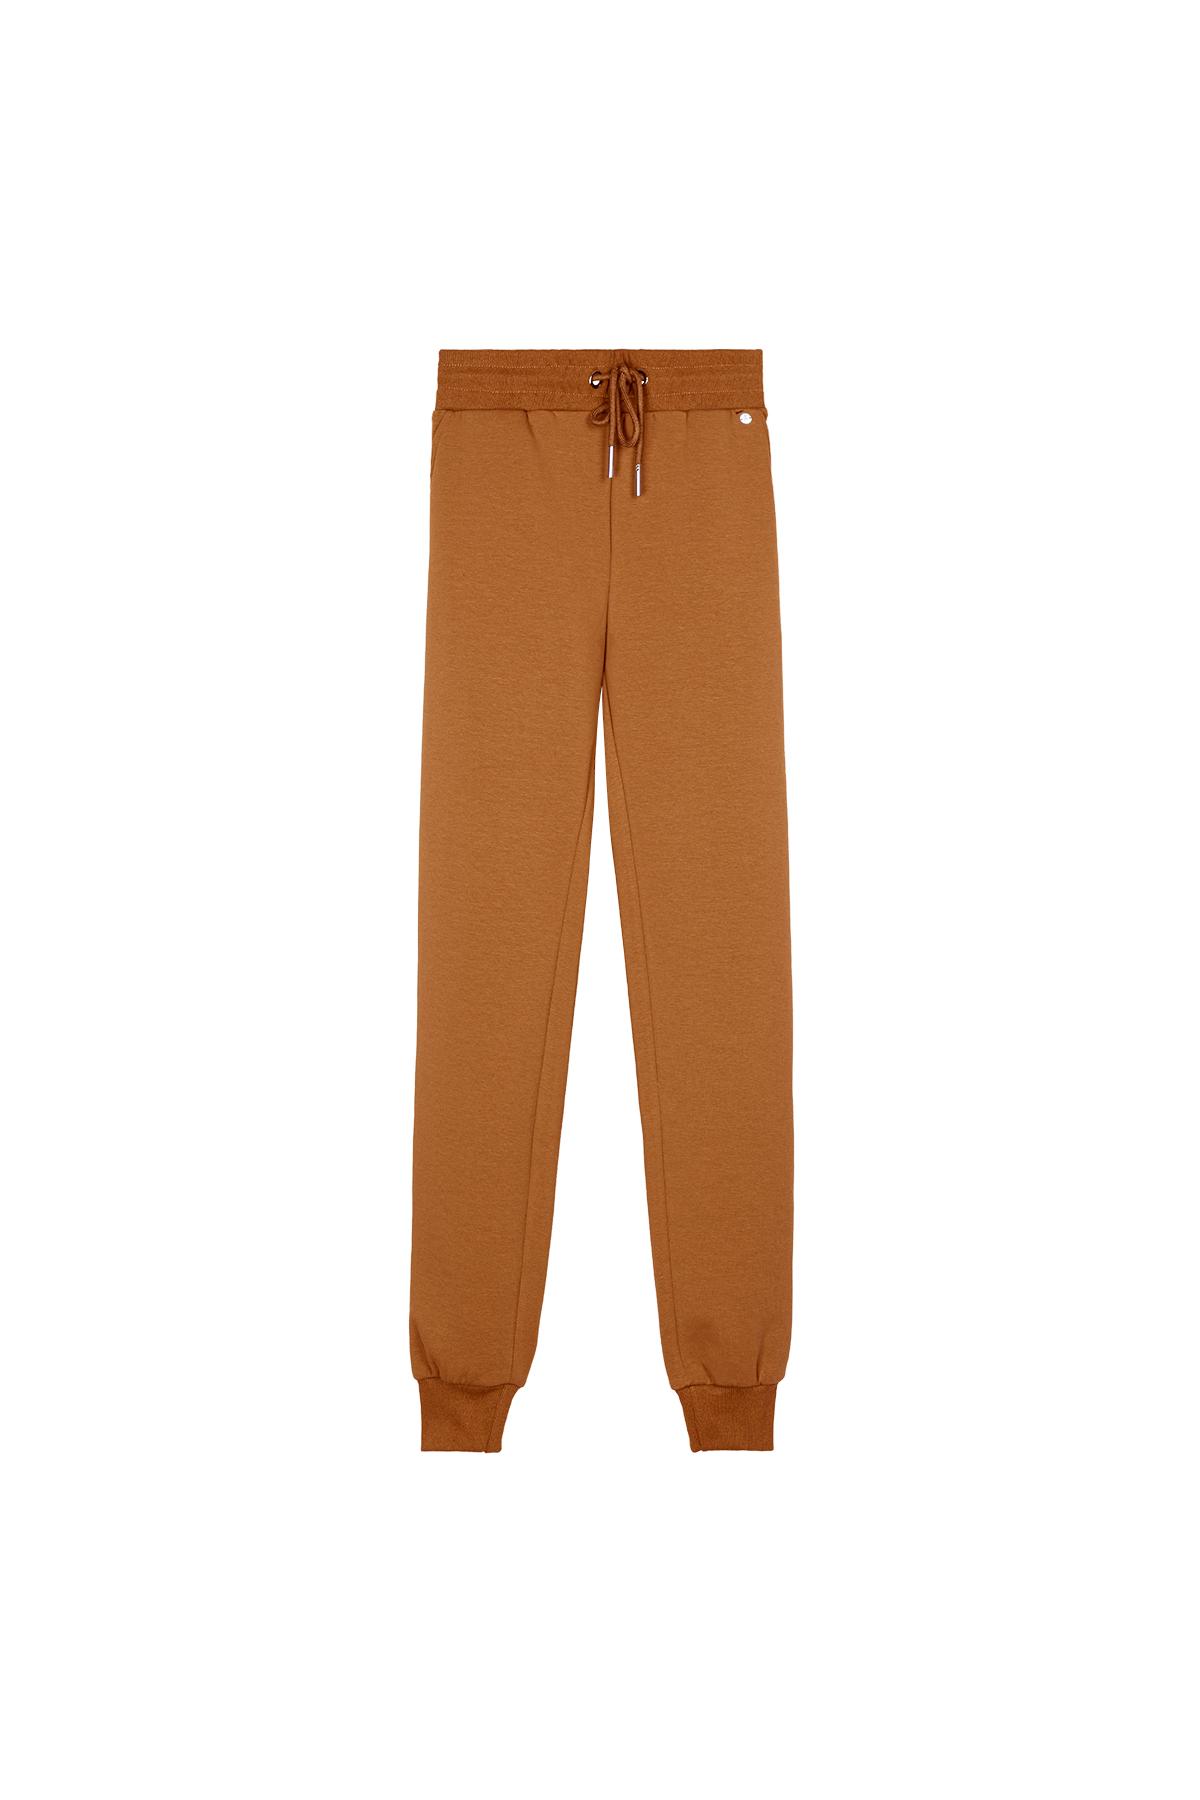 Comy Hosen Loungewear Orange XL 